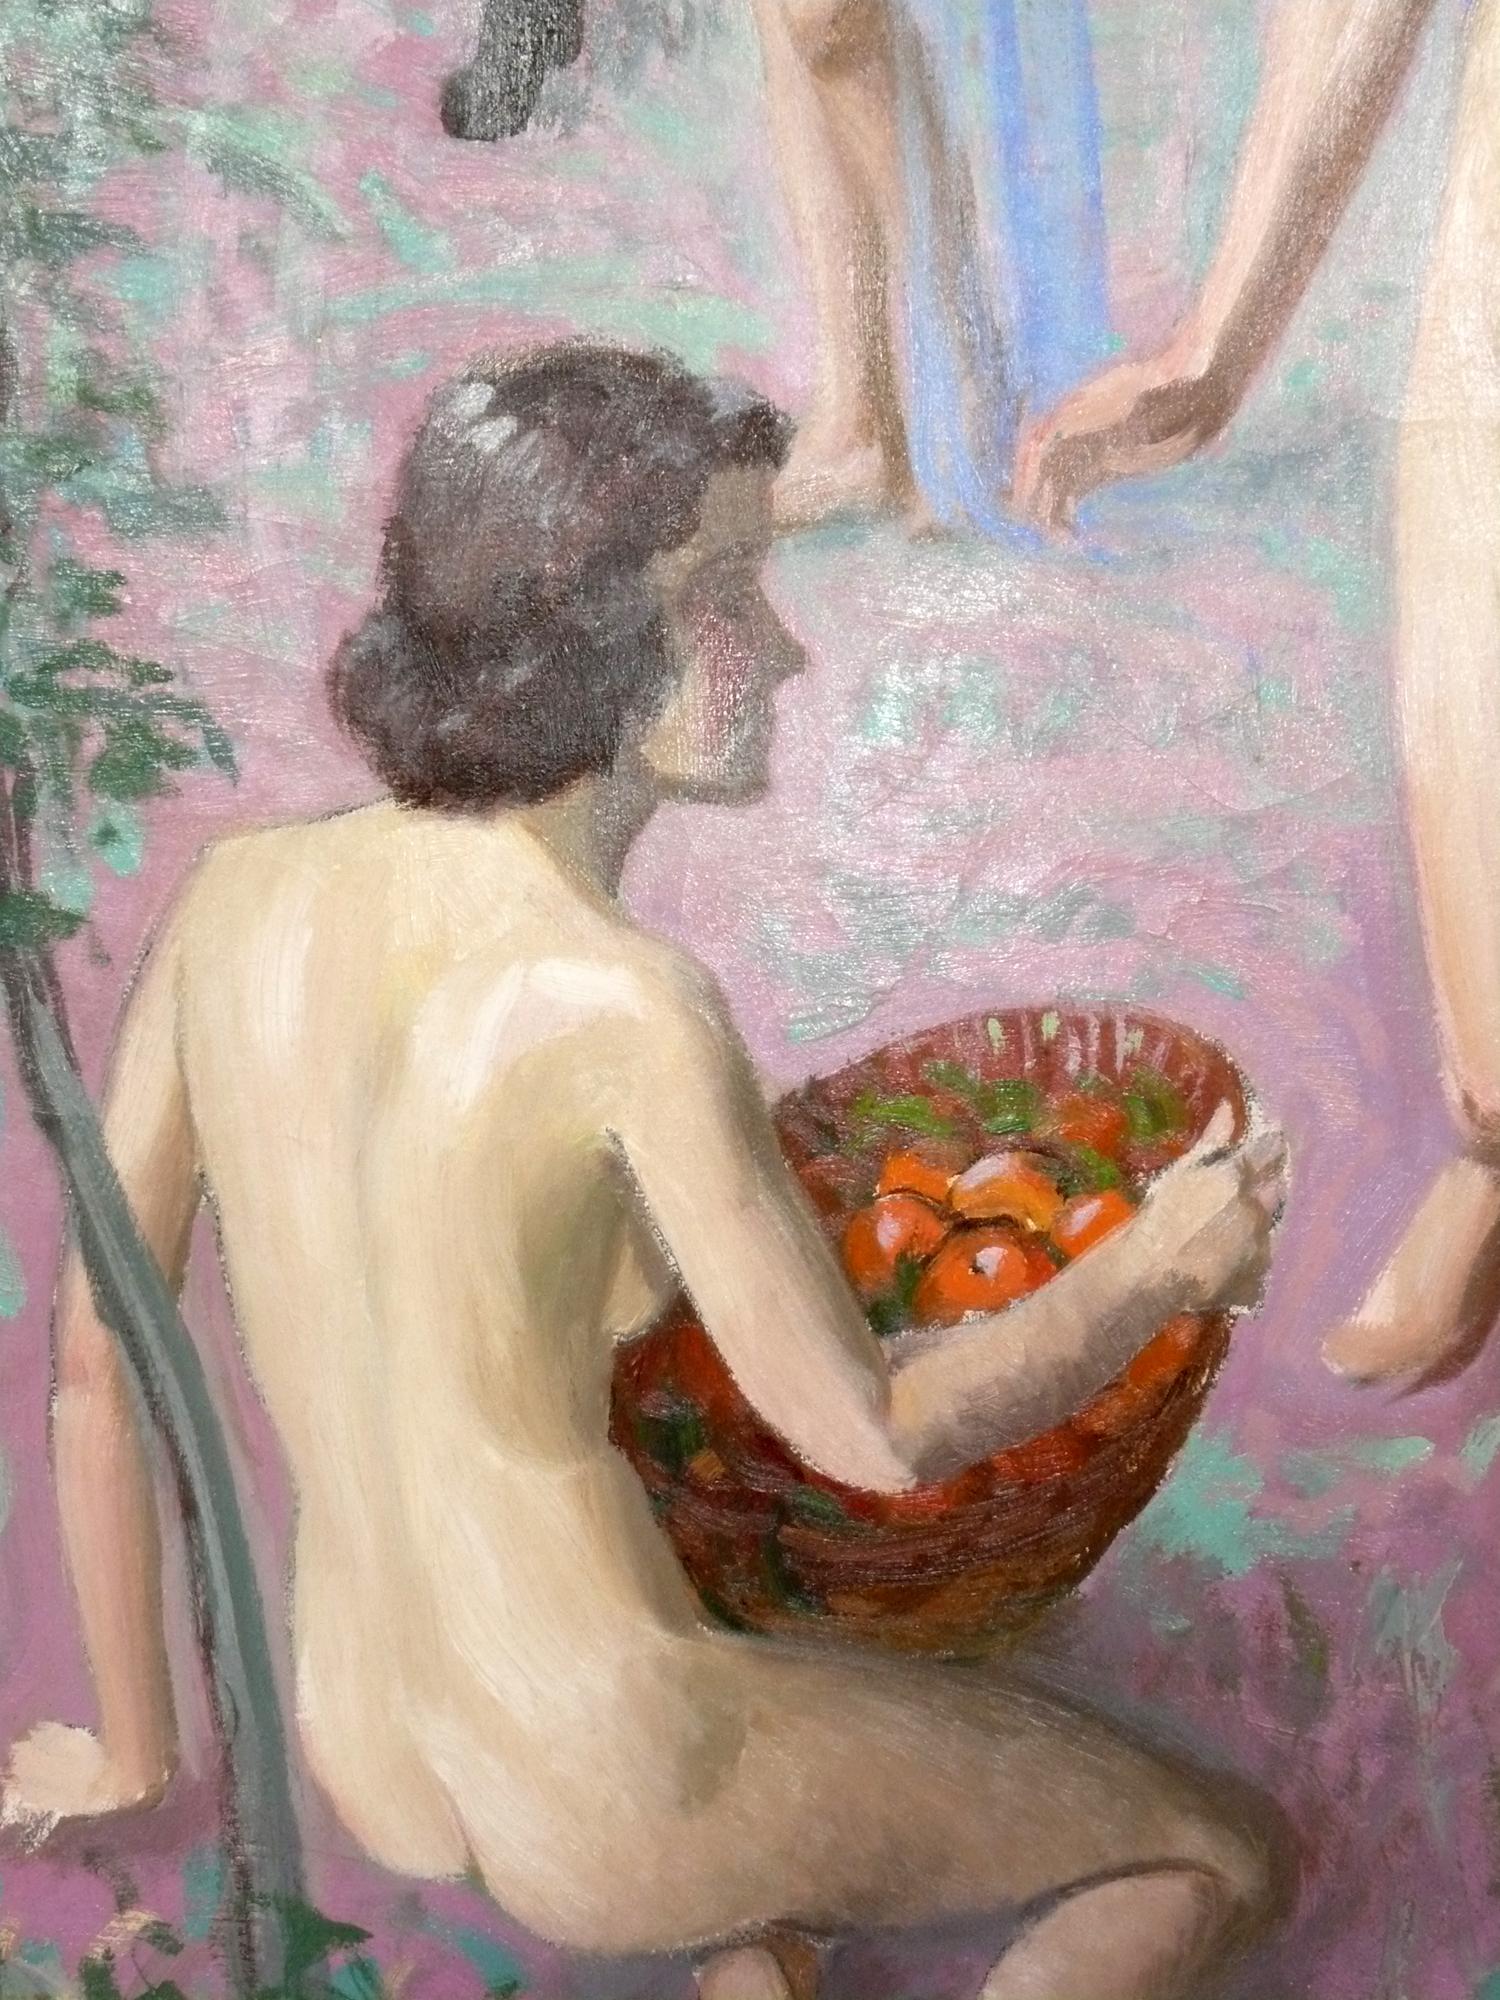 American Art Deco Female Nudes Painting circa 1930s - Impressive Size 38